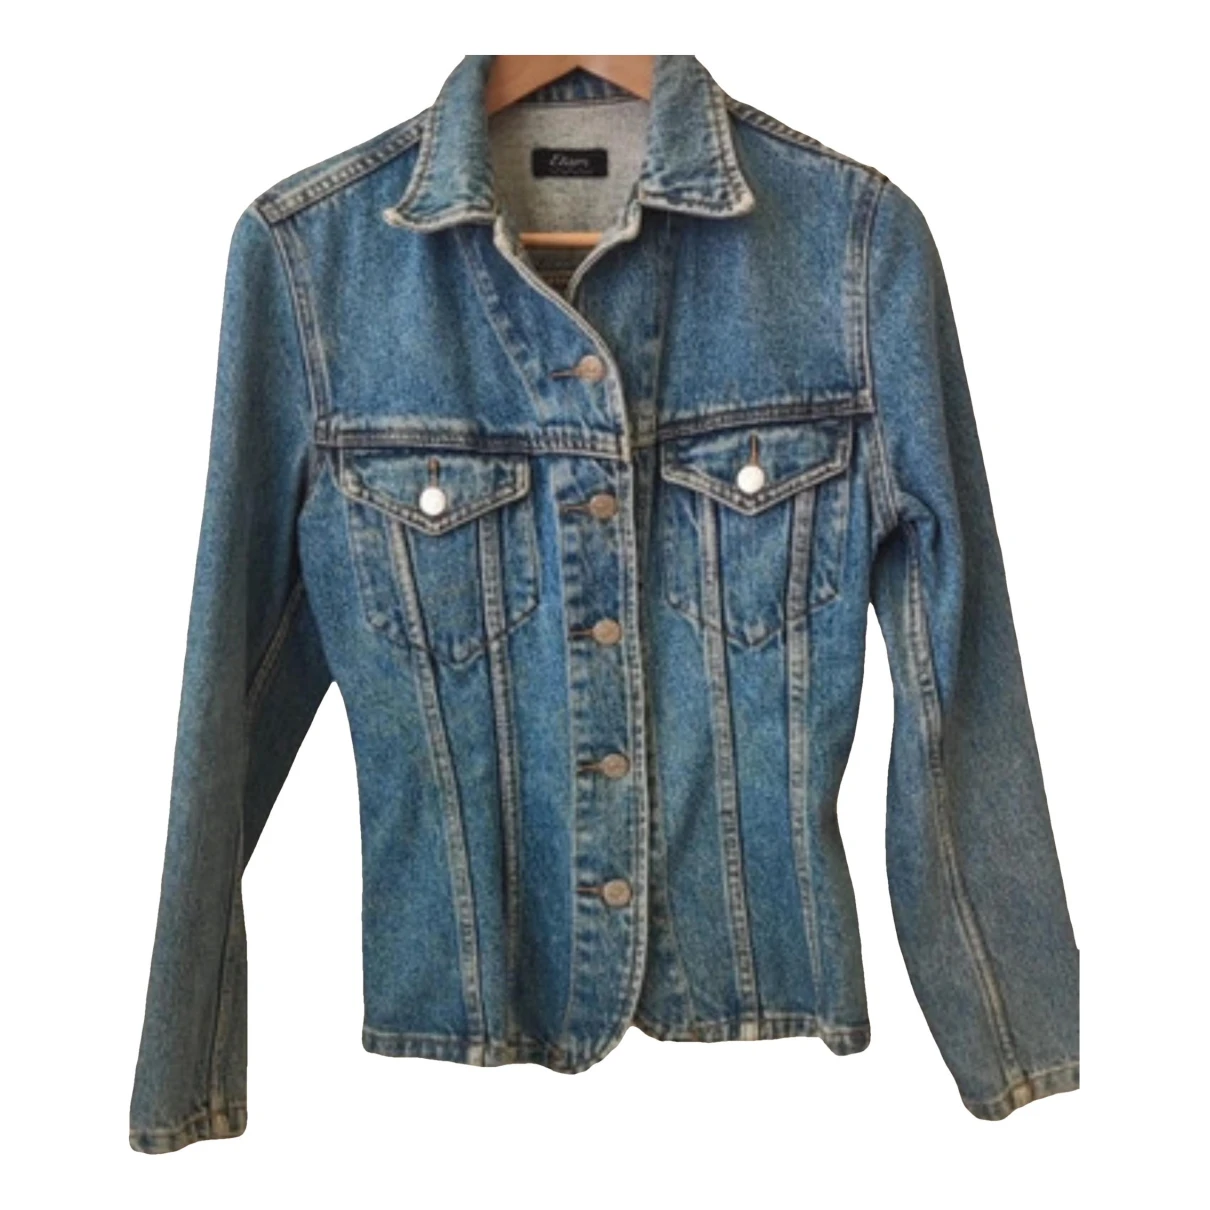 clothing Etam jackets for Female Denim - Jeans 38 FR. Used condition